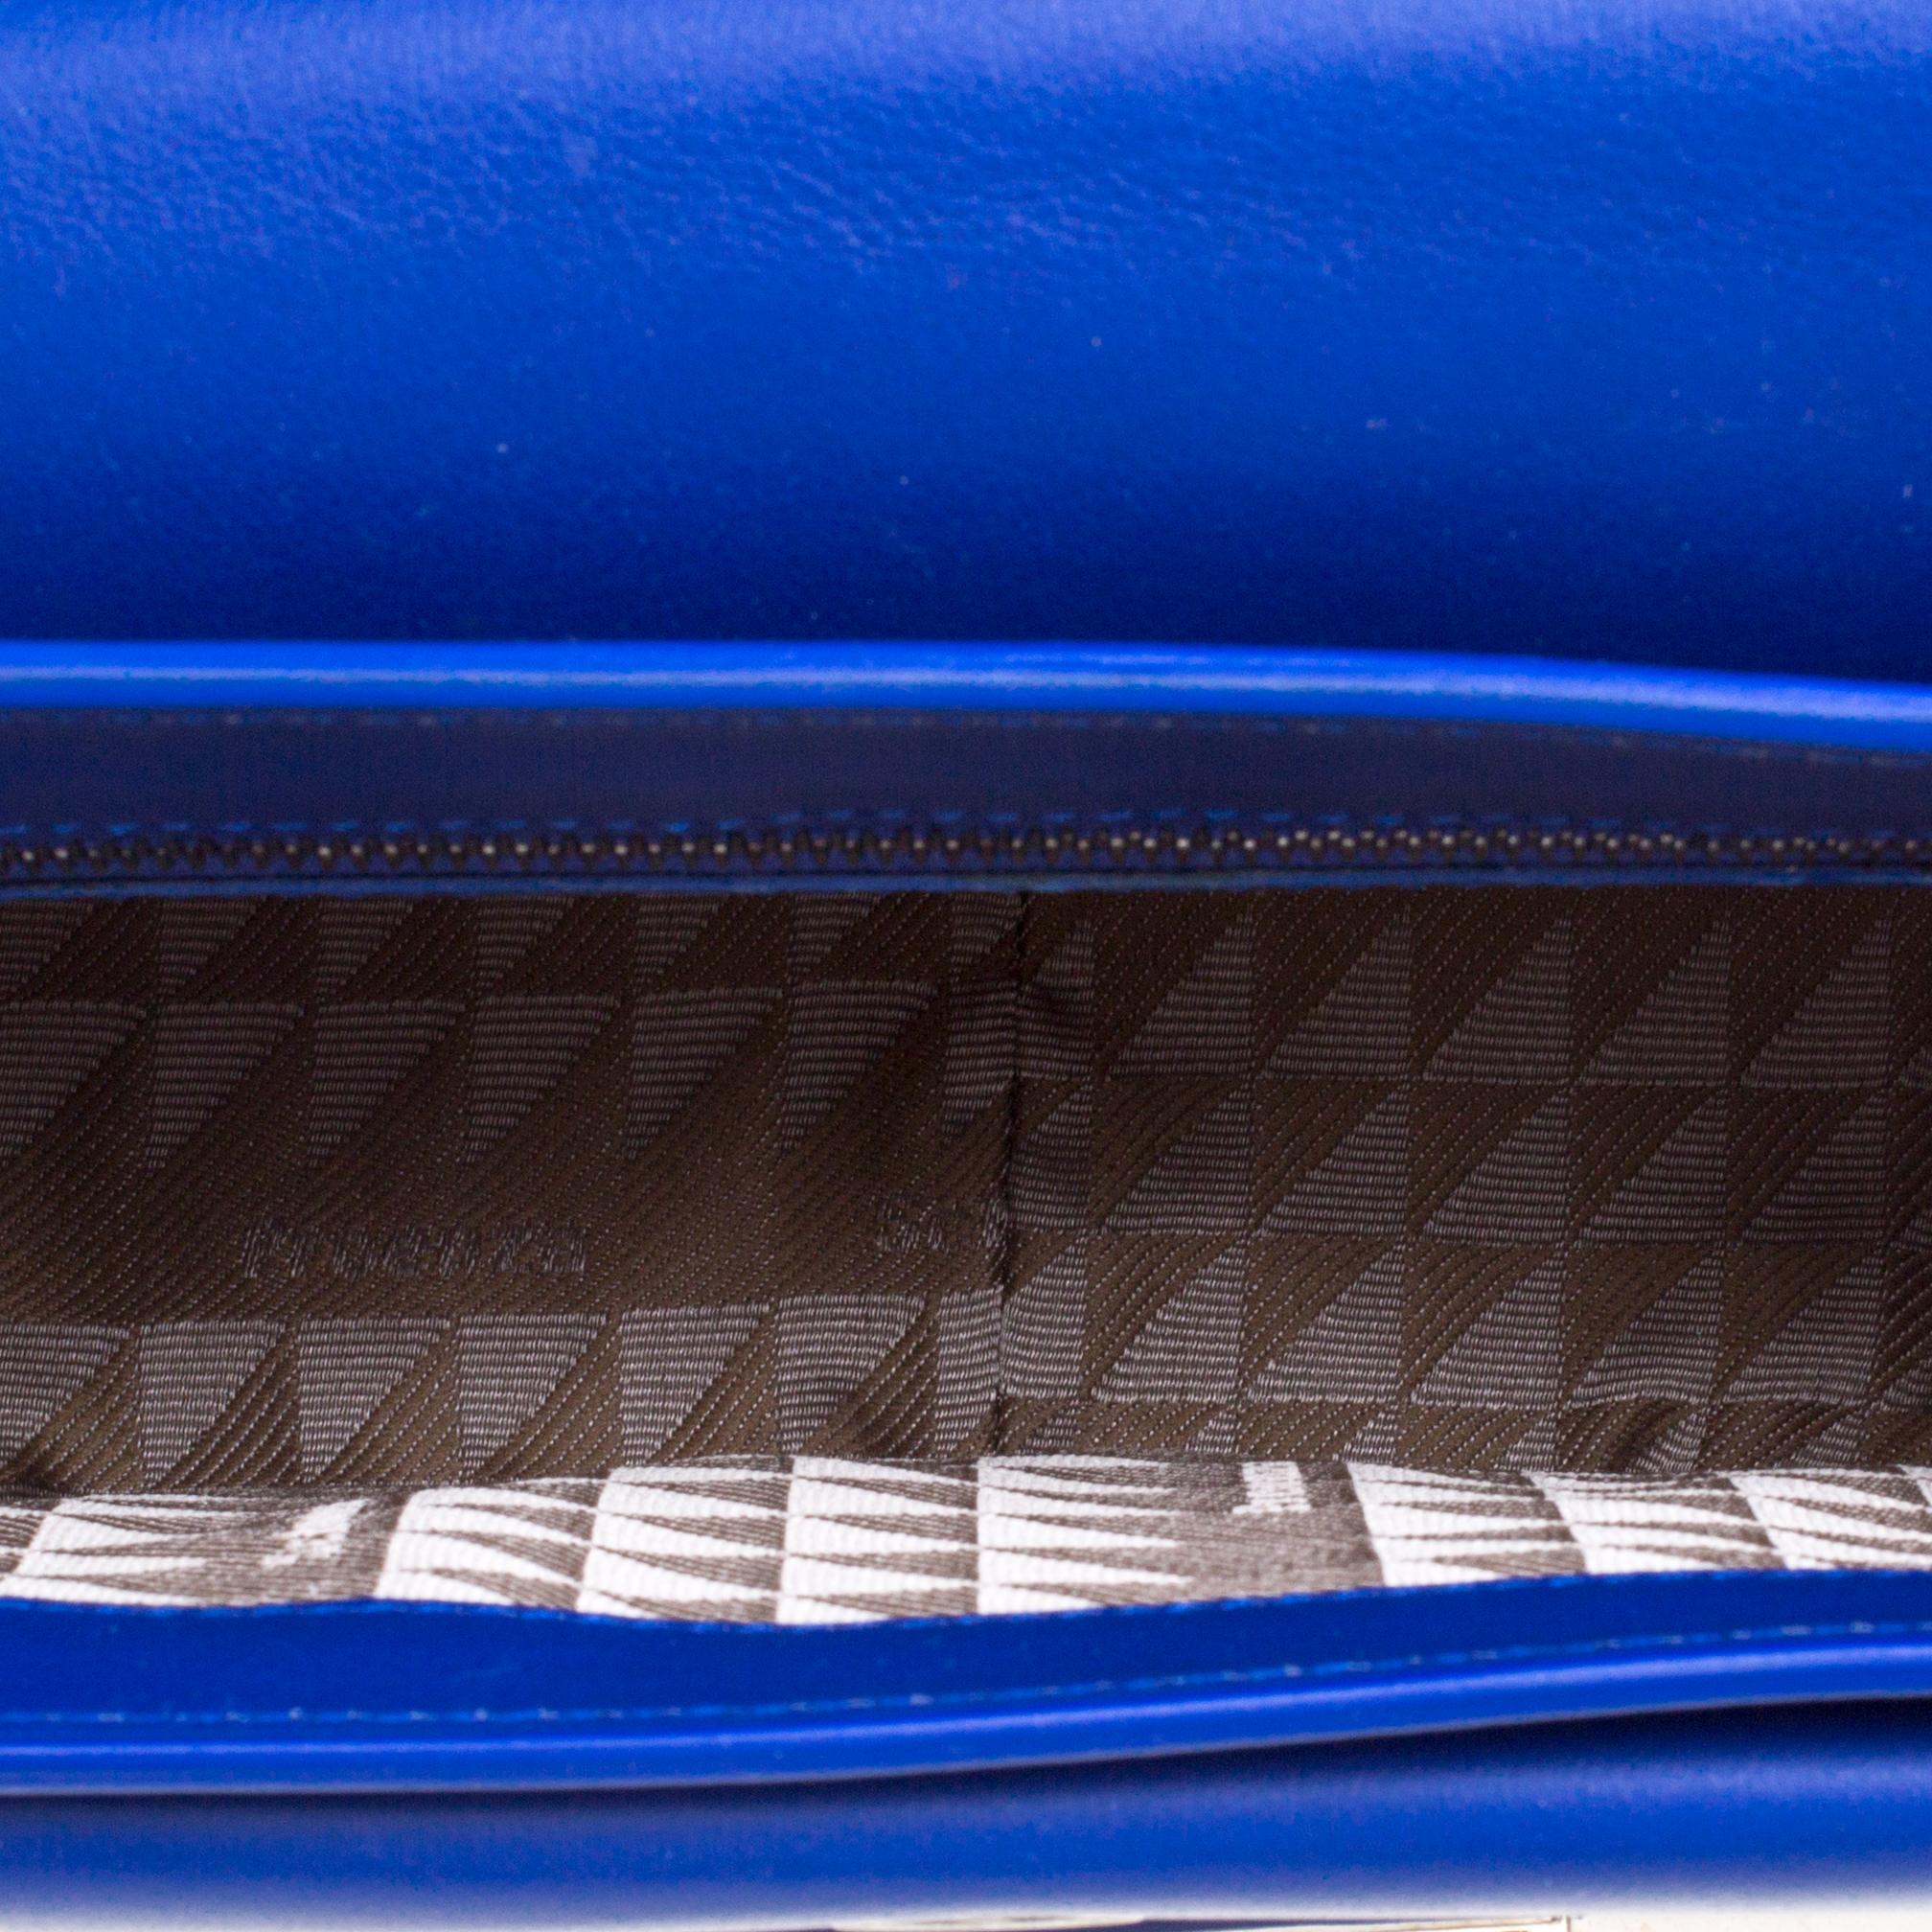 Proenza Schouler Blue Leather Mini Classic PS11 Shoulder Bag 3